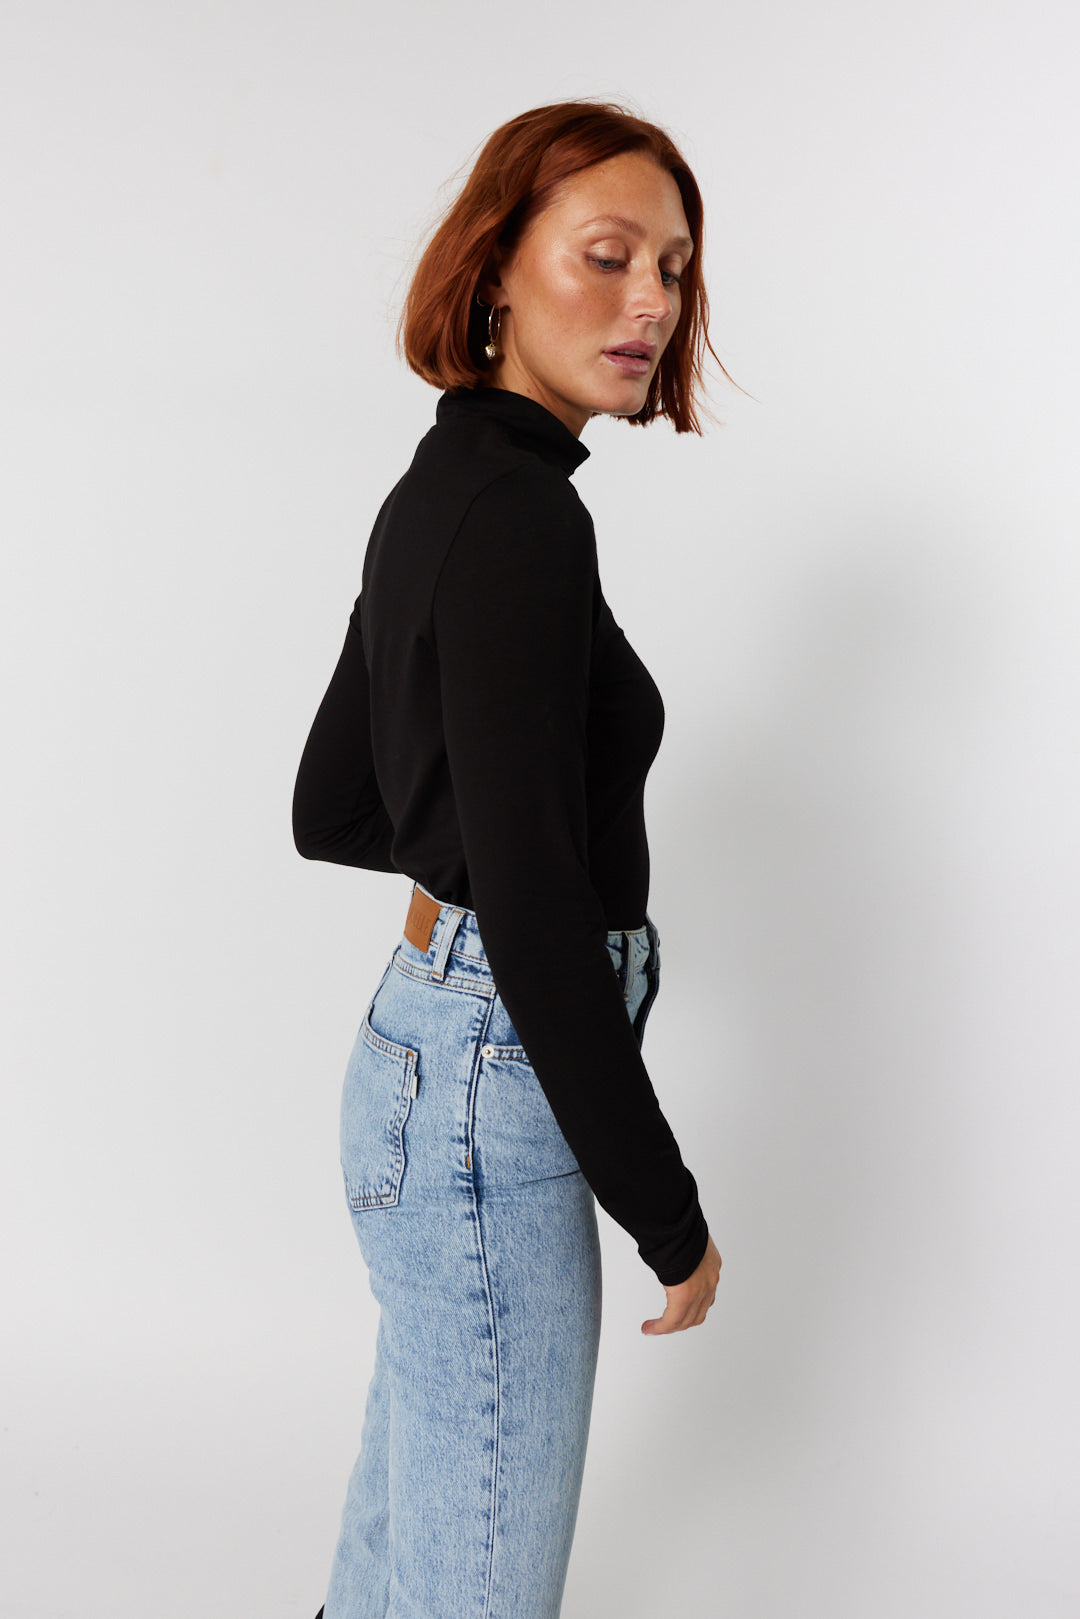 Black turtleneck sweater | Roulade